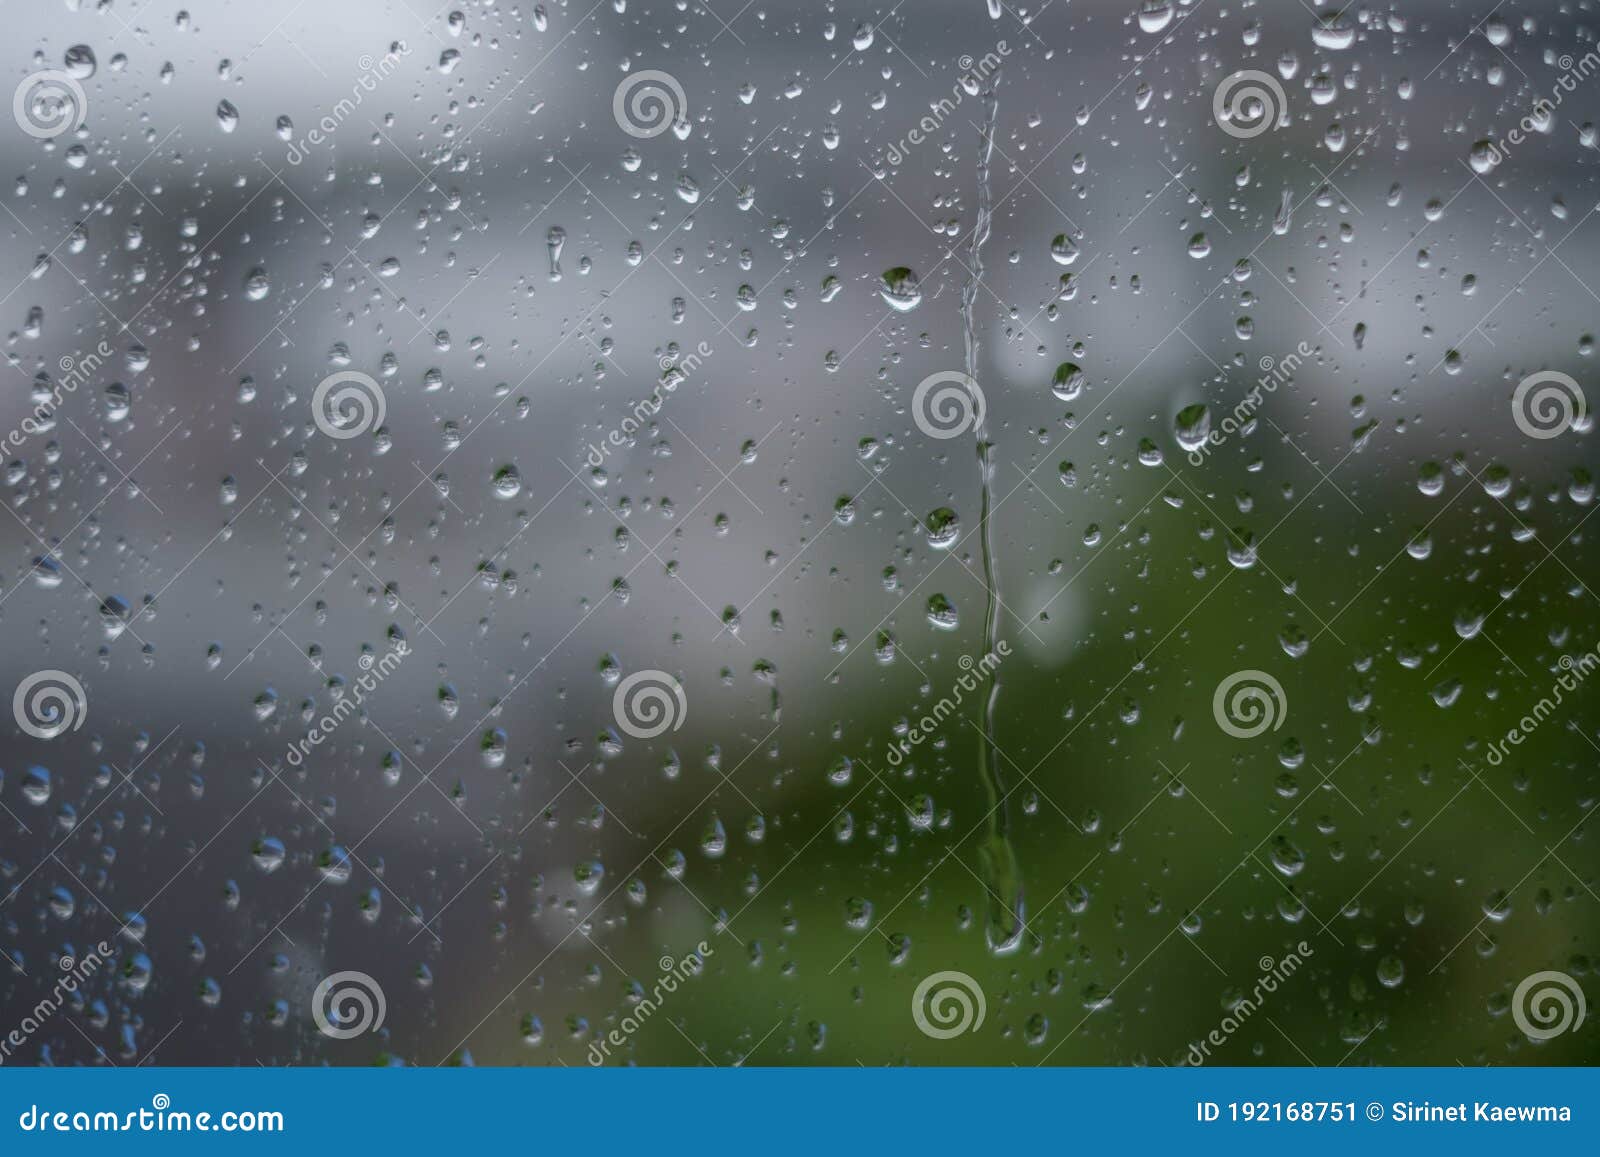 50 Beautiful Rain Wallpapers for your desktop mobile and tablet - HD | Rain  wallpapers, Rainy wallpaper, Hd cool wallpapers